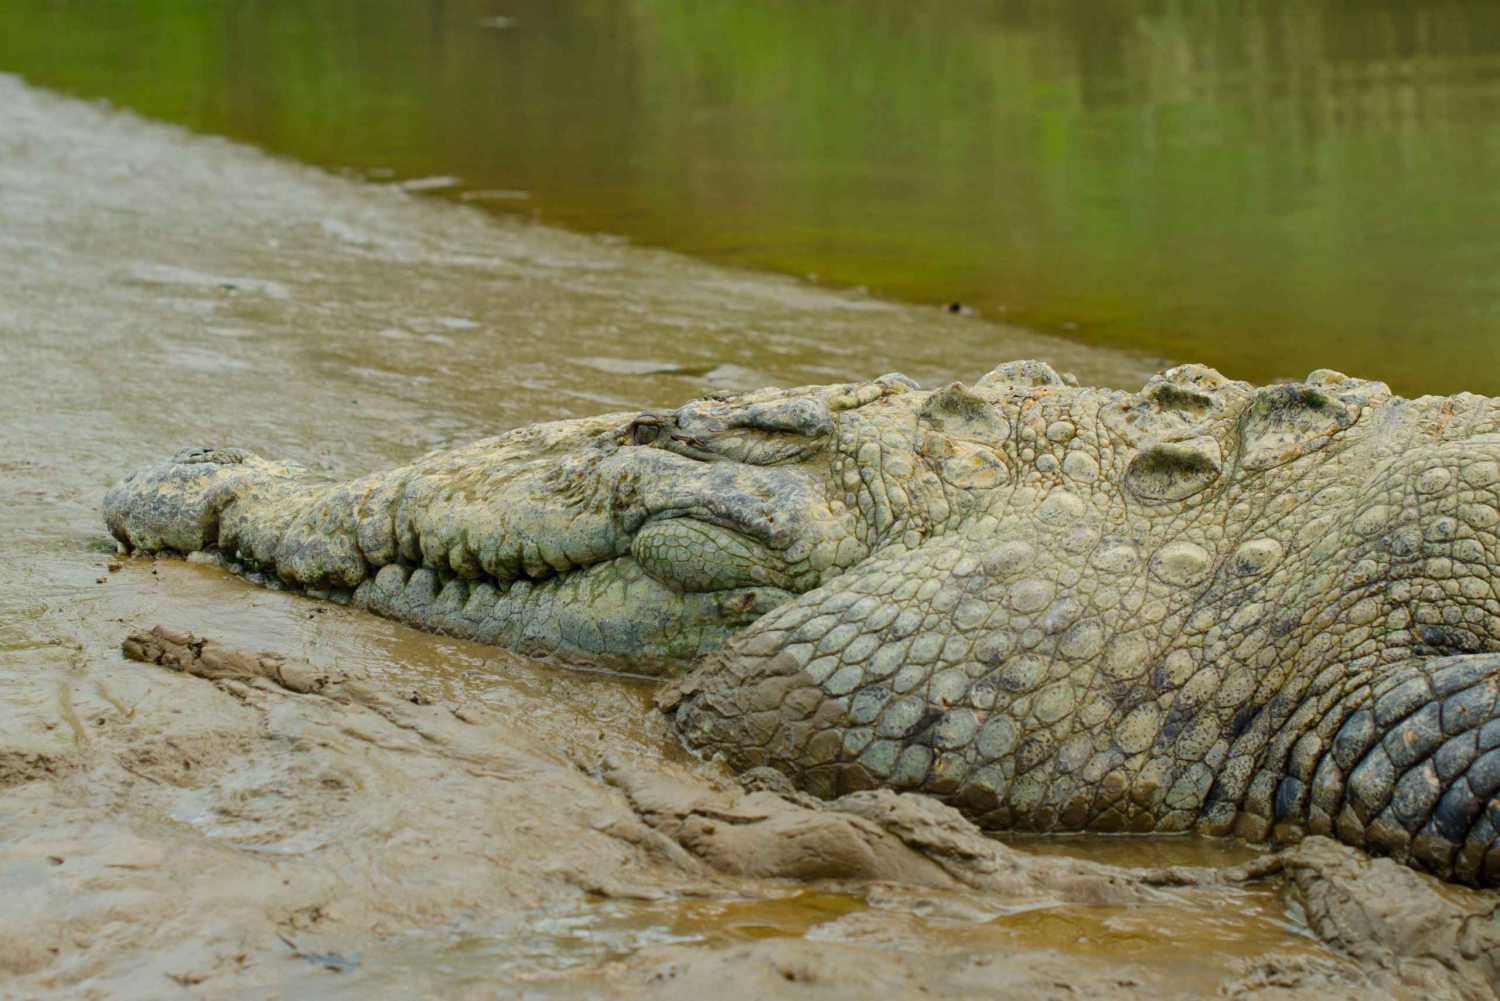 San Jose: Rio da selva e aventura com crocodilos